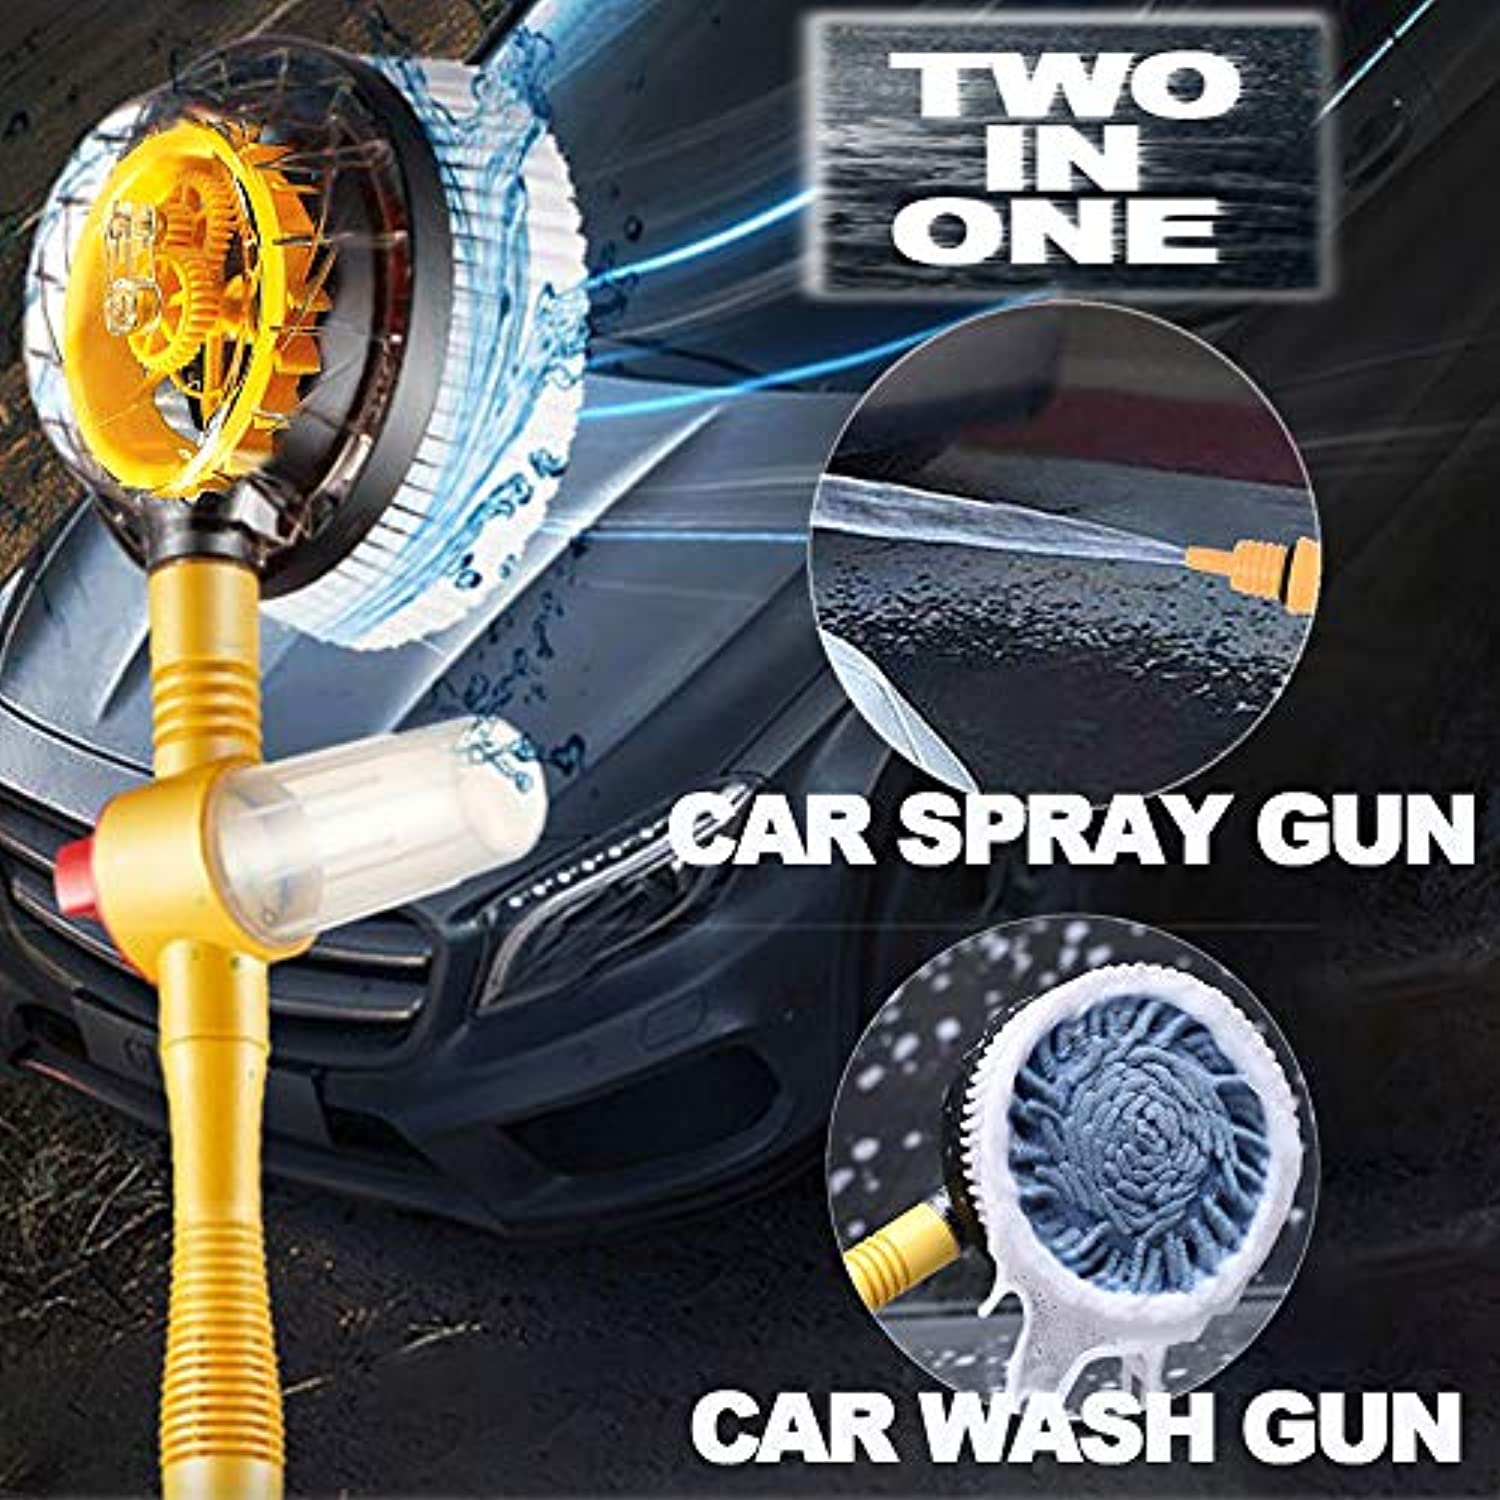 Icarscars Car Wash Brush, Car Cleaning Kit, 360° Spin Car Mop, Microfiber Car Cleaning Brush, Detachable & Extendable Scrub Brush, Garden Hose Spray Nozzle Spray Gun For Car Home Cleaning & Garden Use